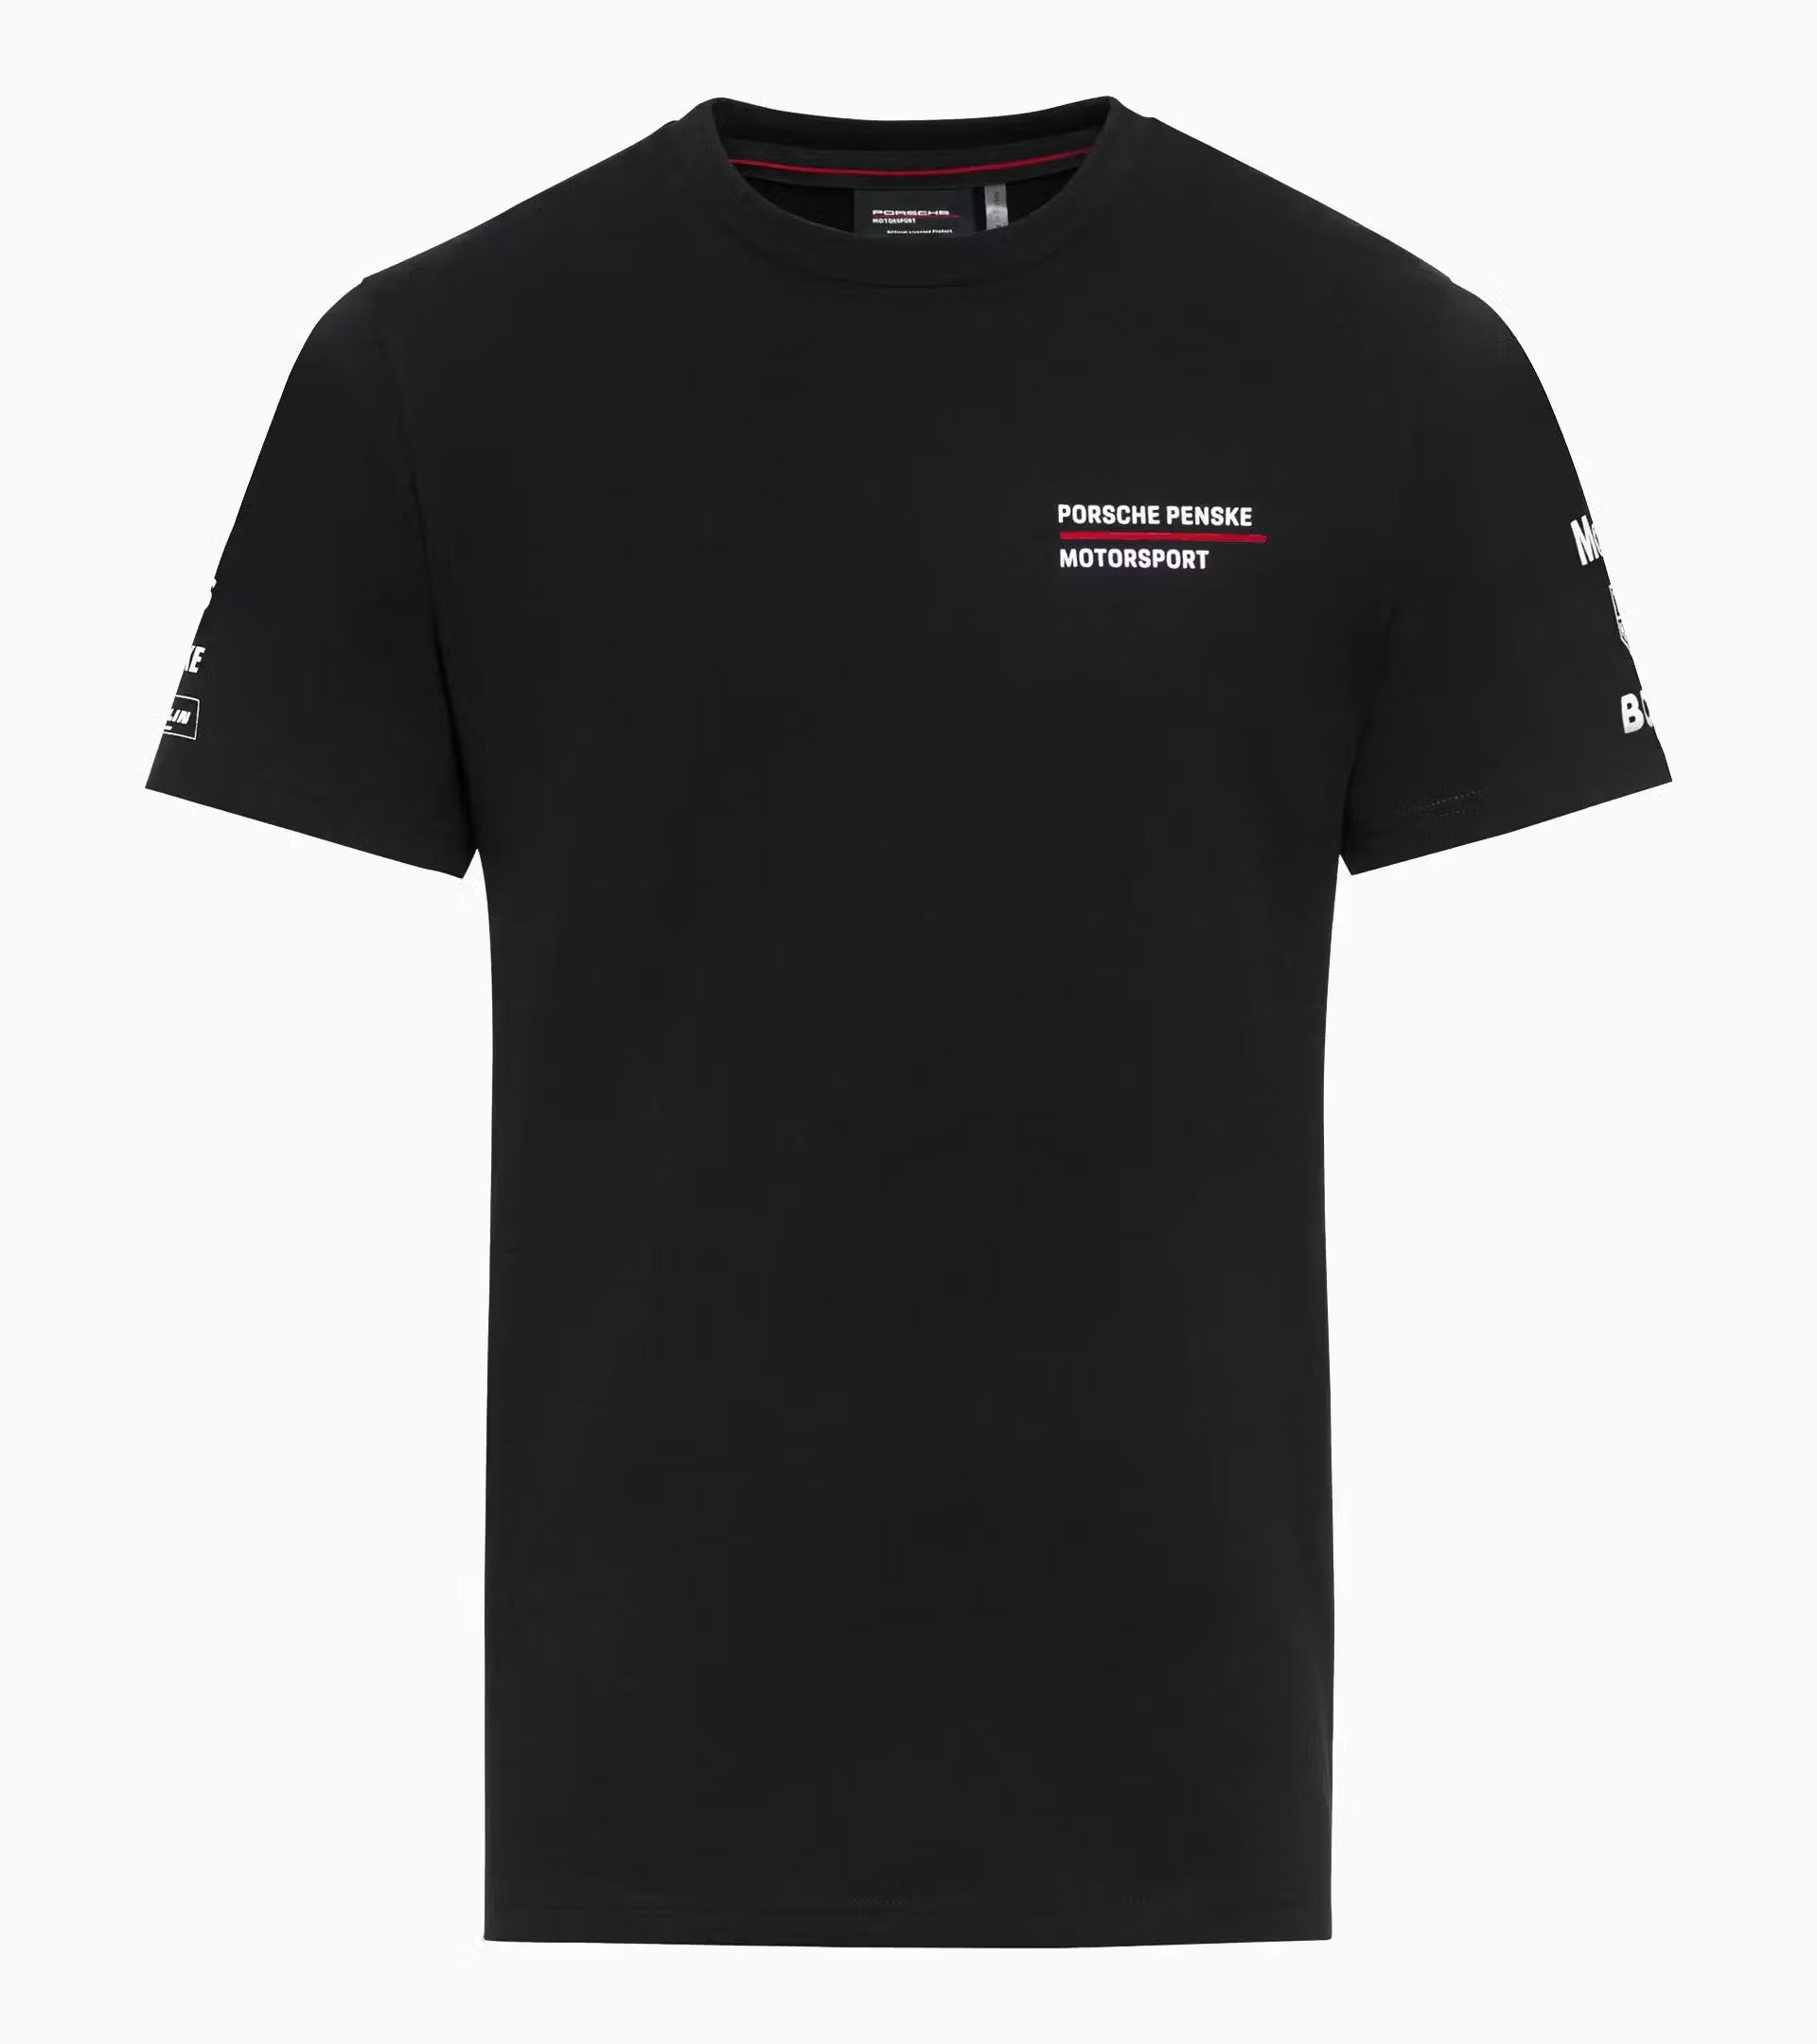 Porsche T-shirt unisex – Porsche Penske Motorsport